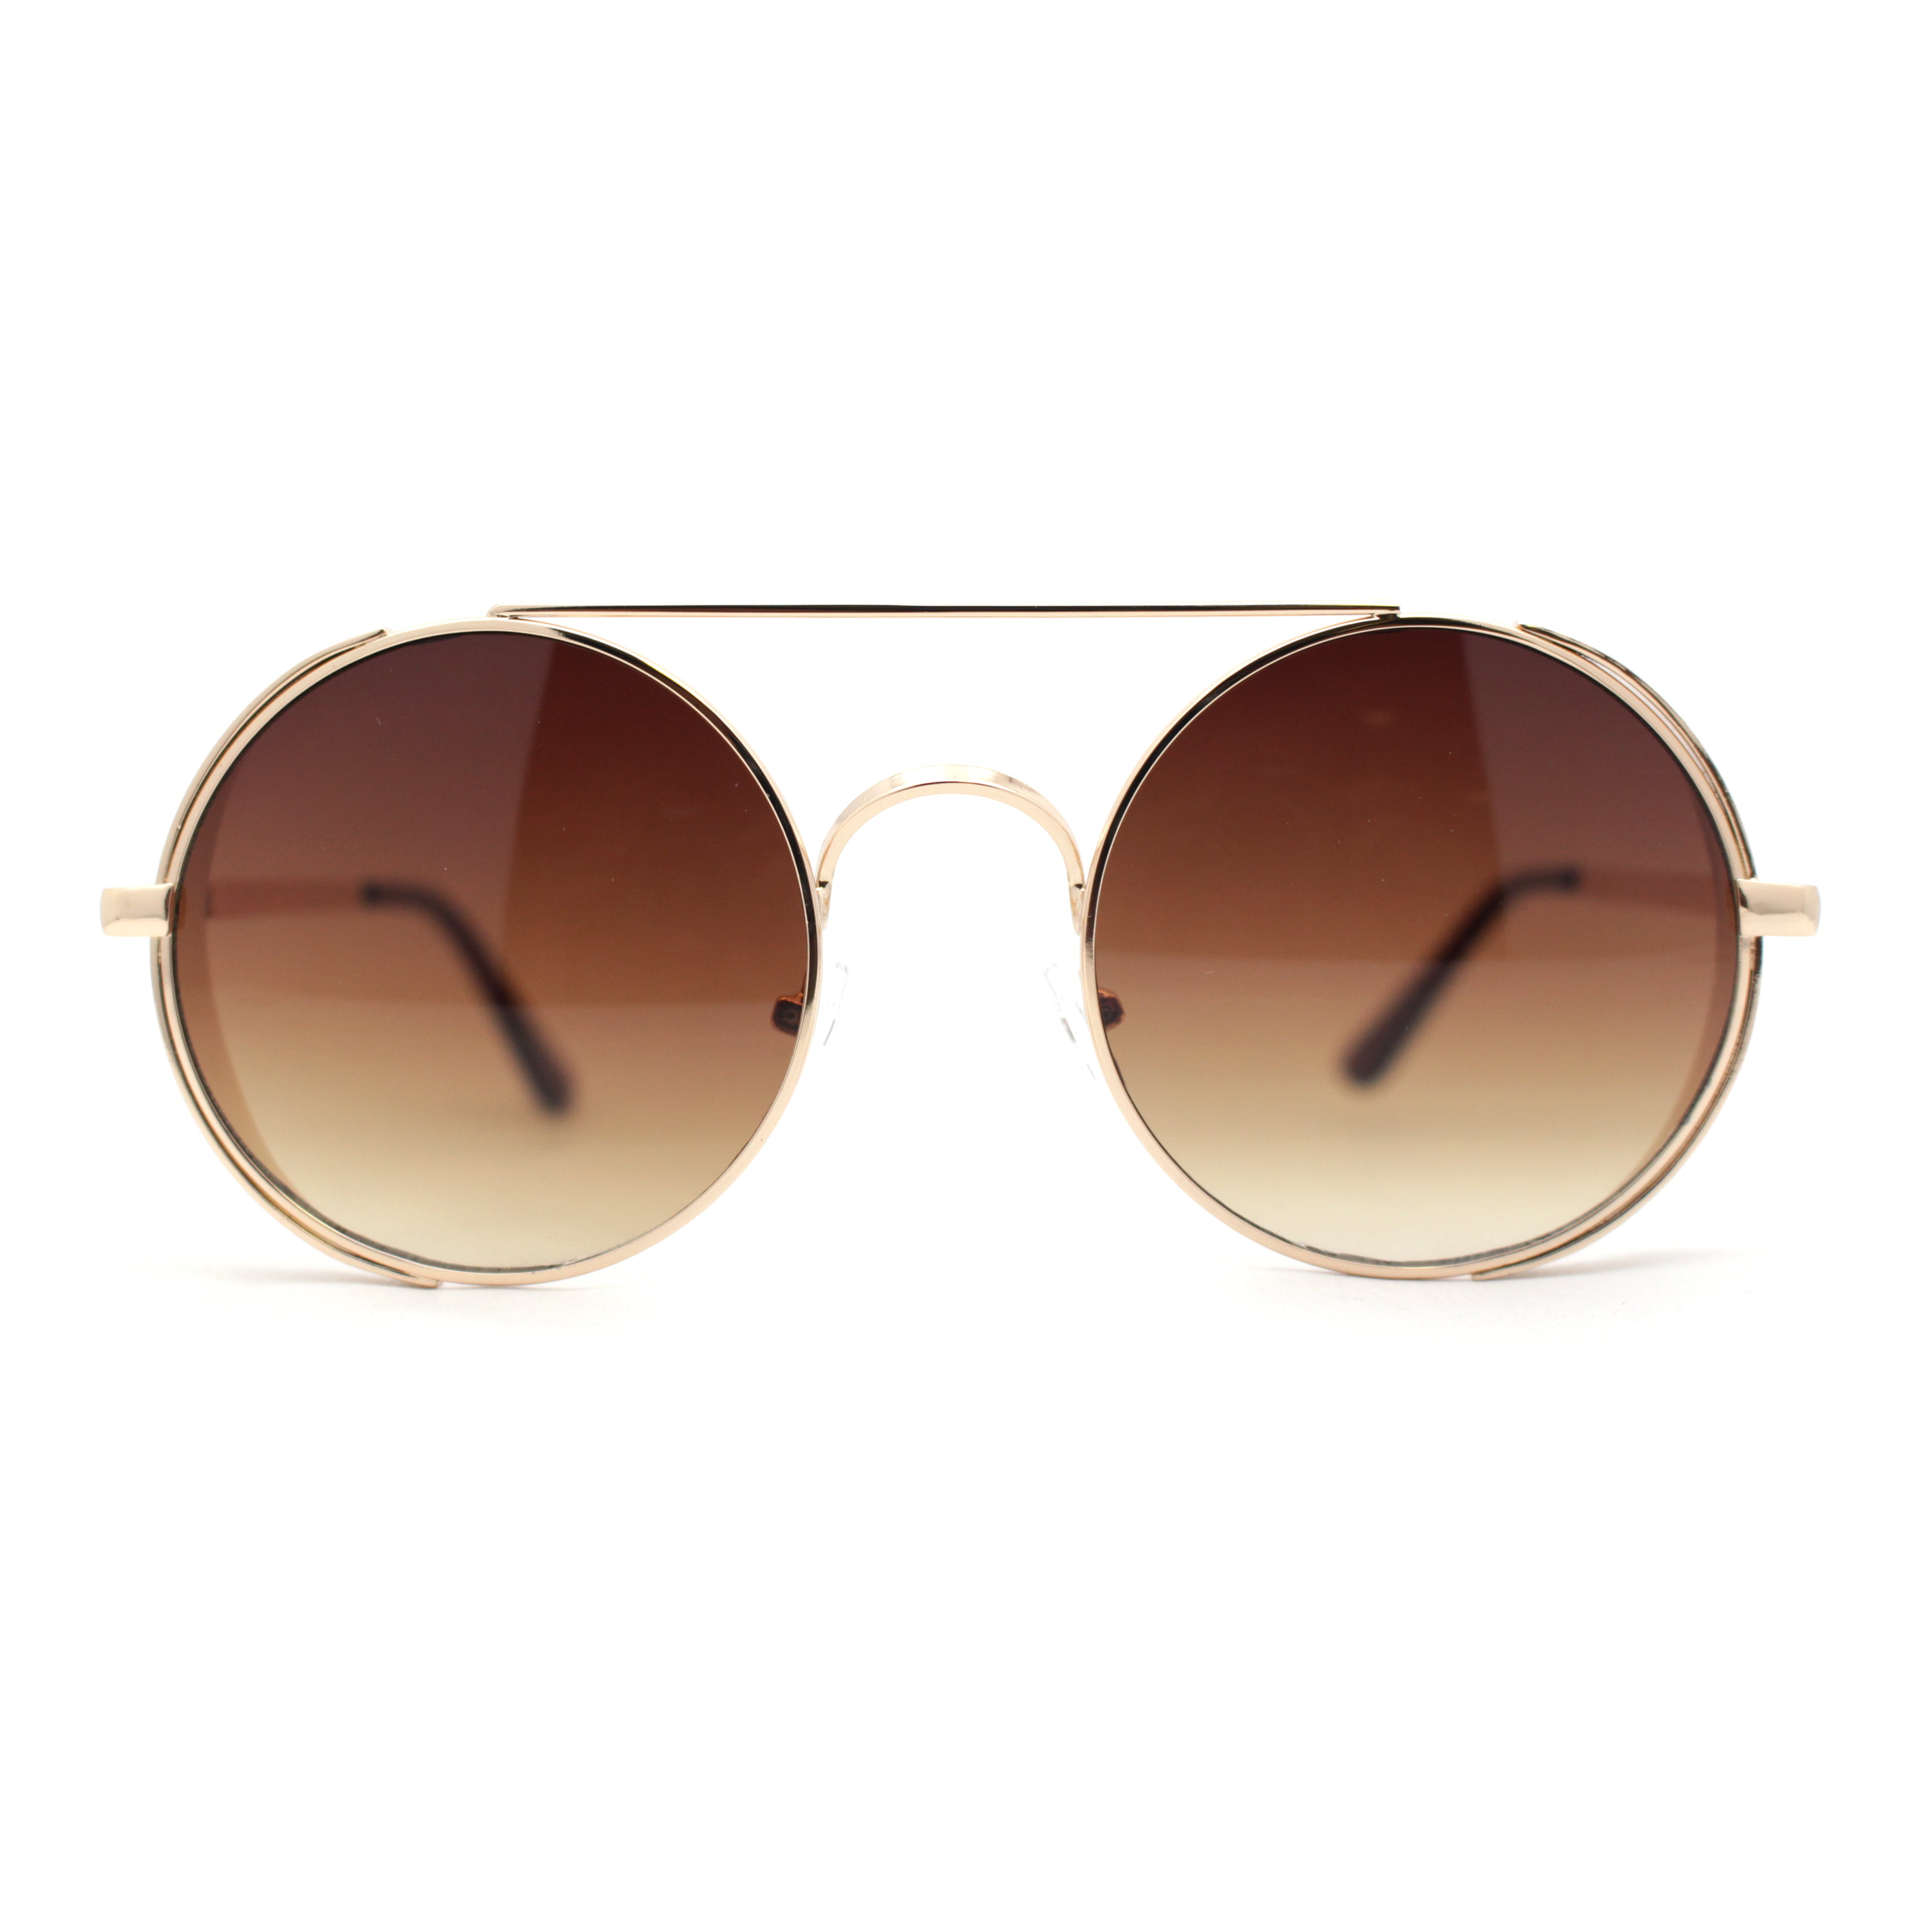 Round Circle Lens Side Double Bridge Yellow - Retro Sunglasses Cafe Racer Black Gold Windbreaker